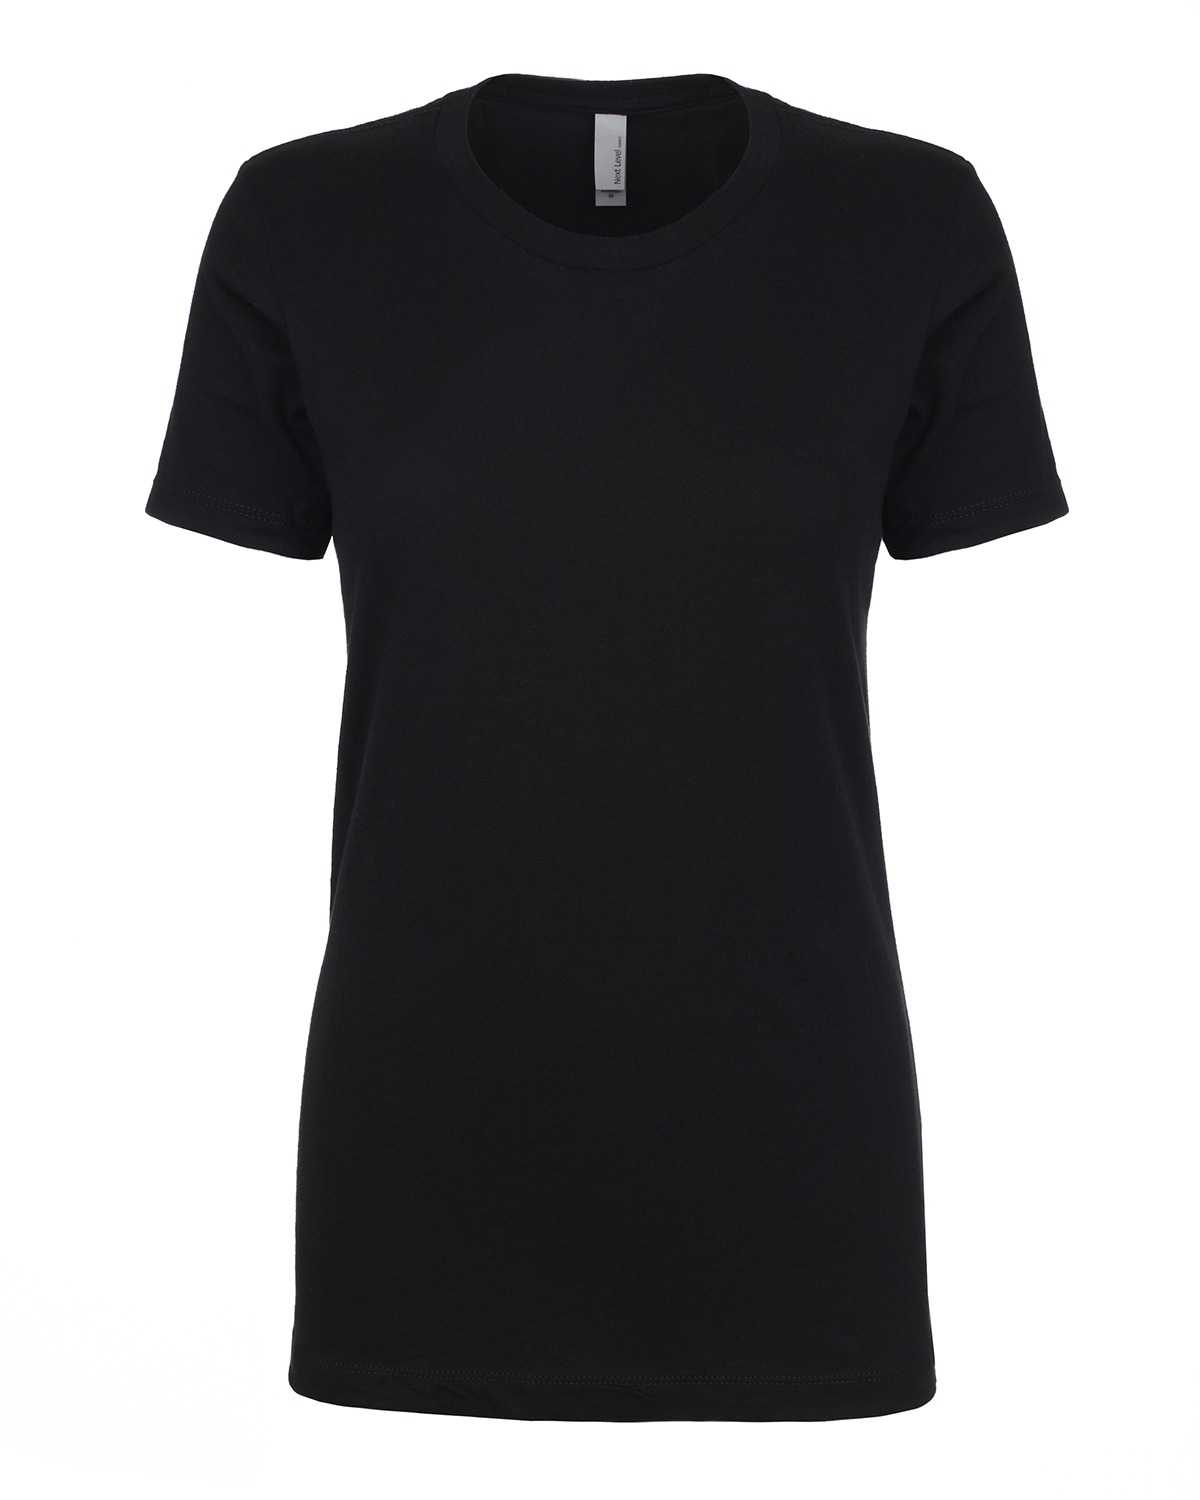 Next Level N1510 Ladies' Ideal T-Shirt | ApparelChoice.com